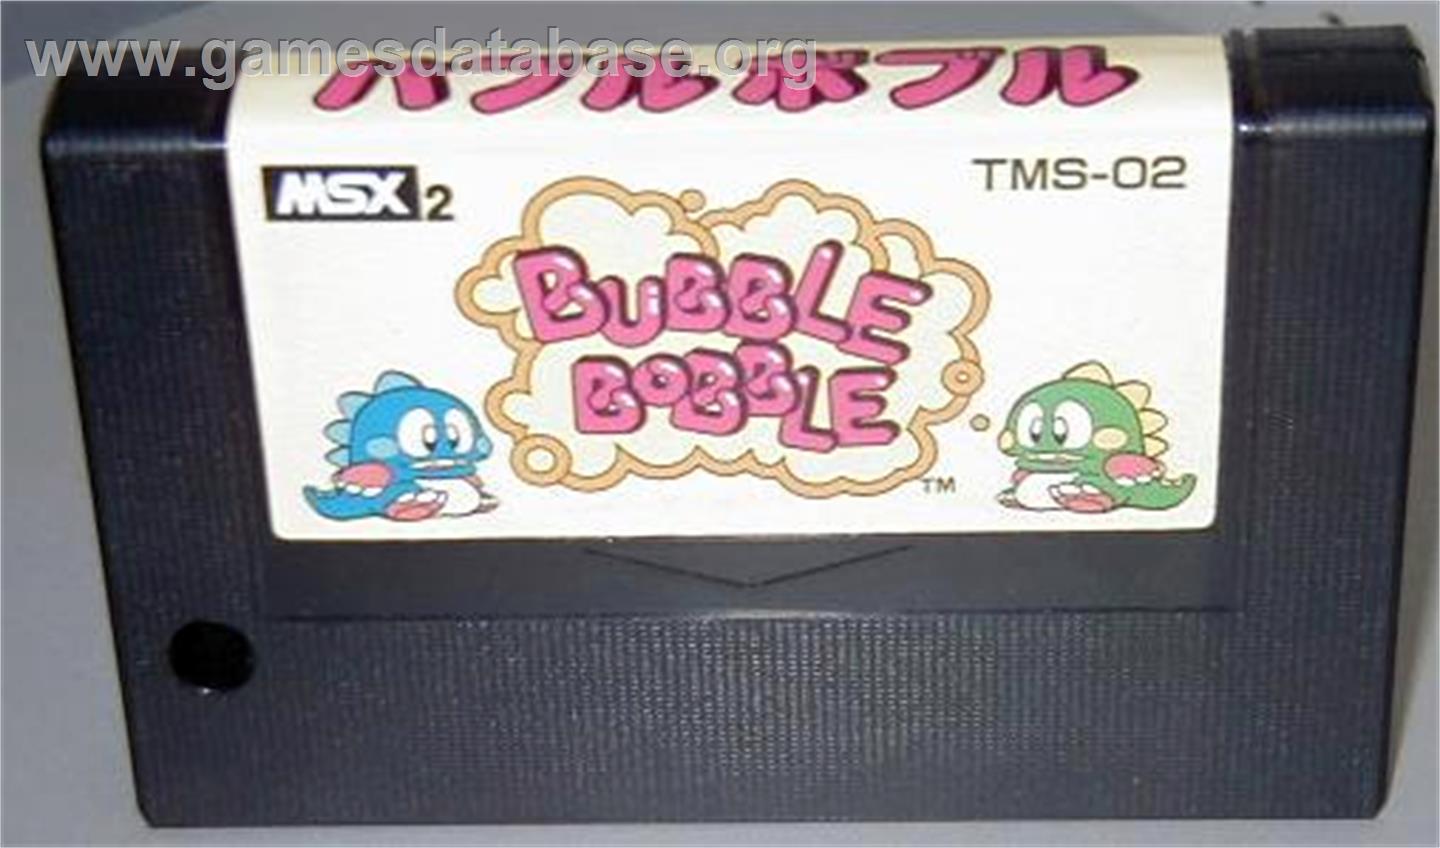 Bubble Bobble - MSX 2 - Artwork - Cartridge